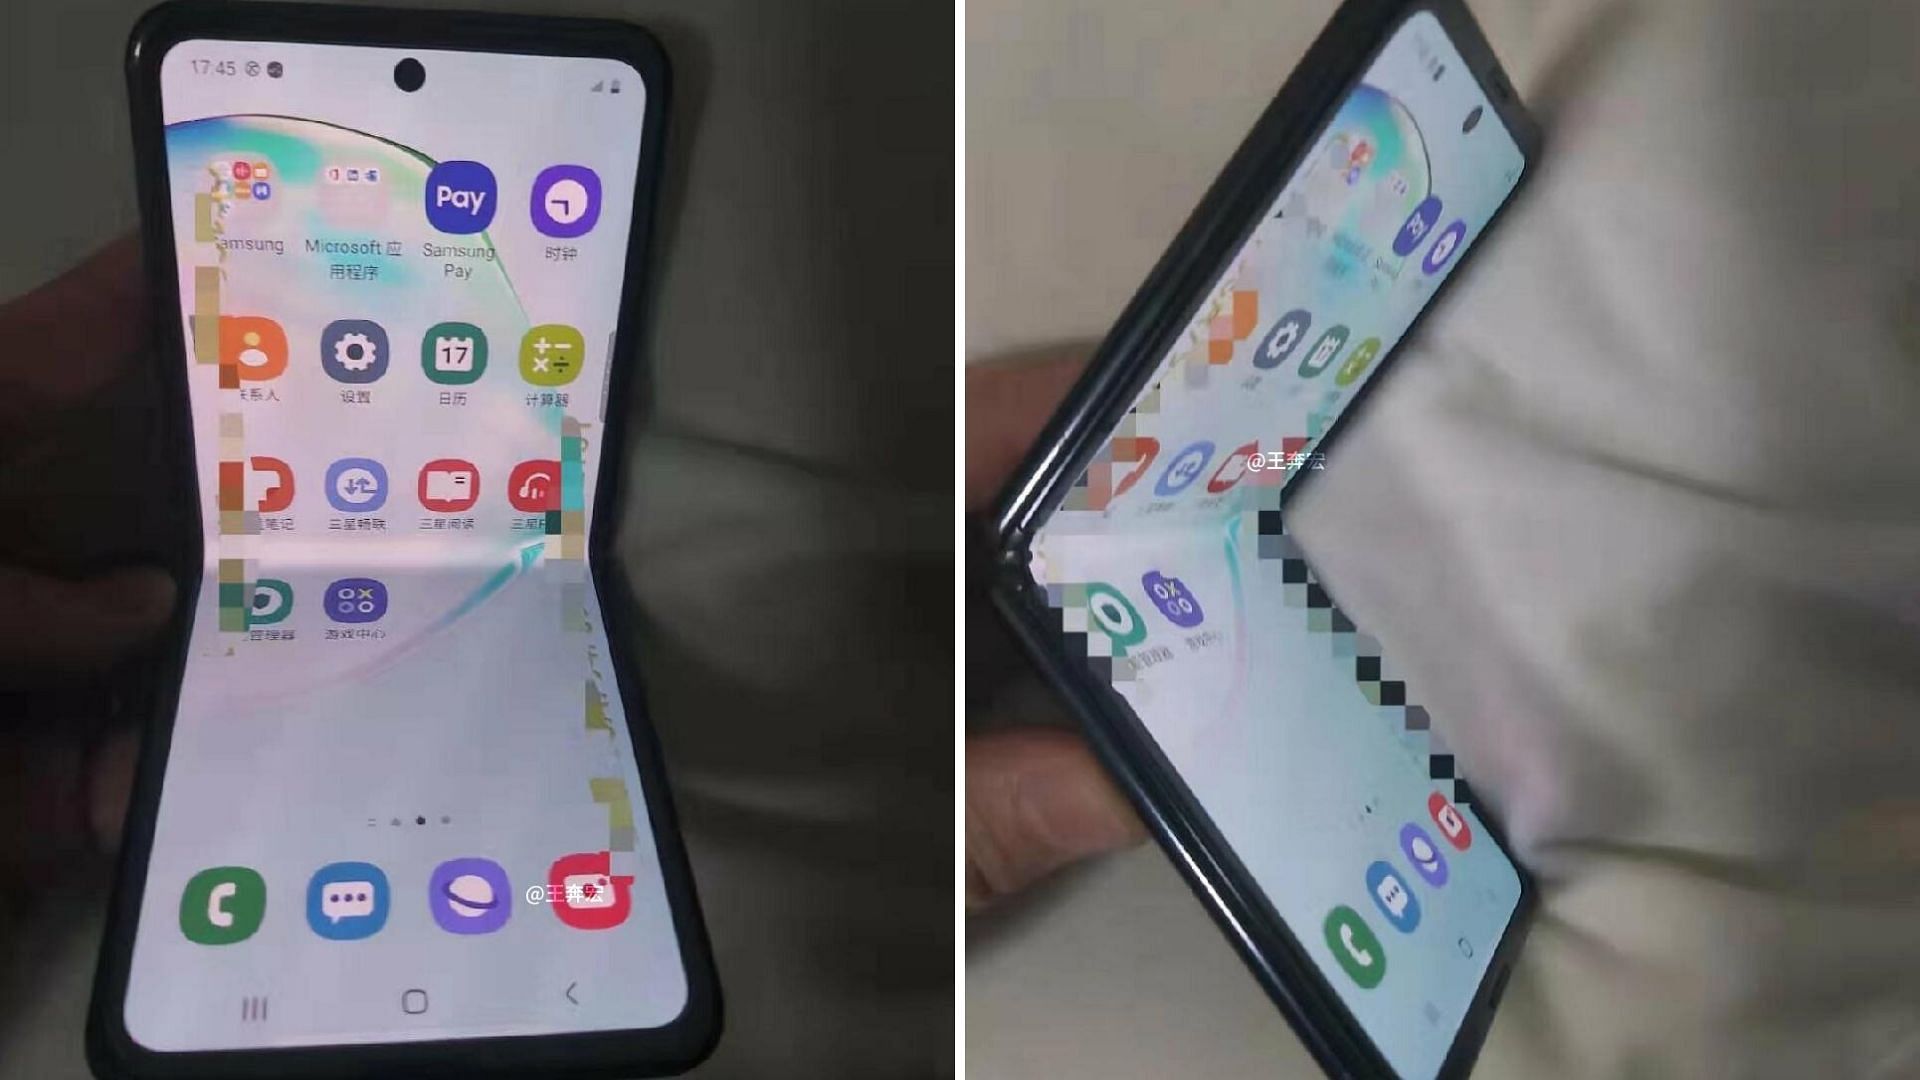 Samsung’s upcoming flip phone runs on Android.